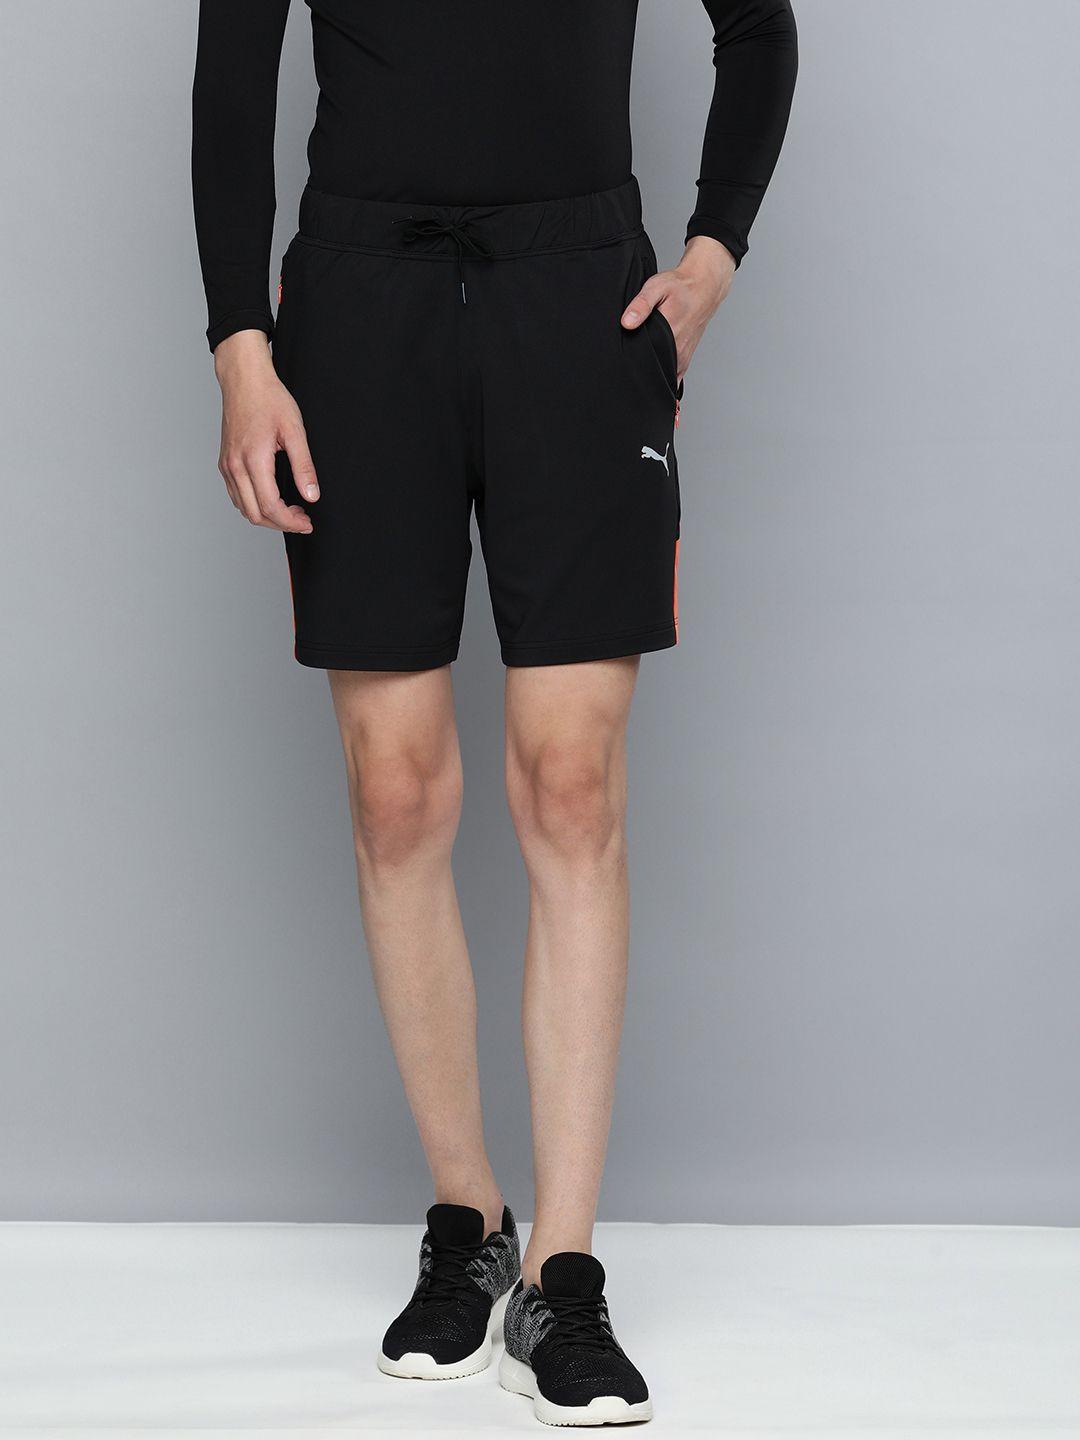 one8 x puma men black solid training shorts